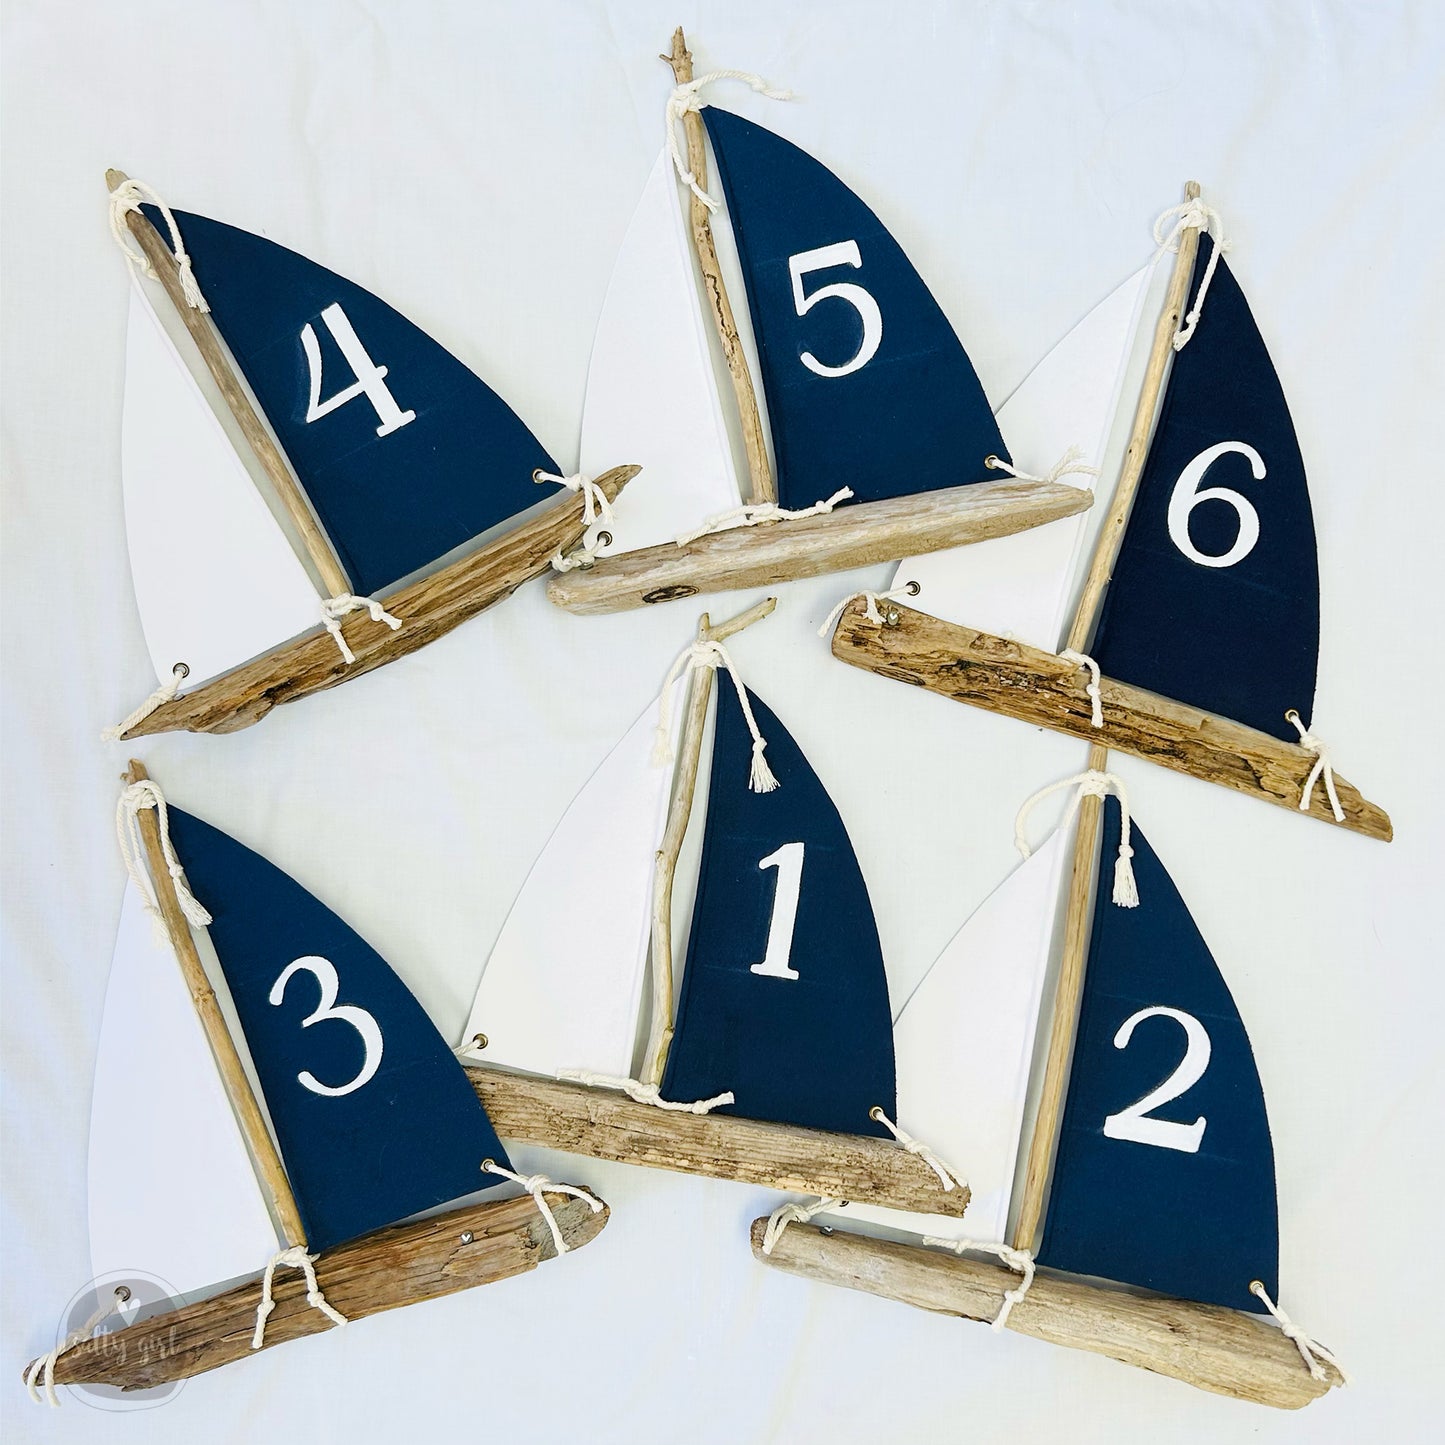 Driftwood Sailboats 16"  - 6 Sailboat Event Centerpieces